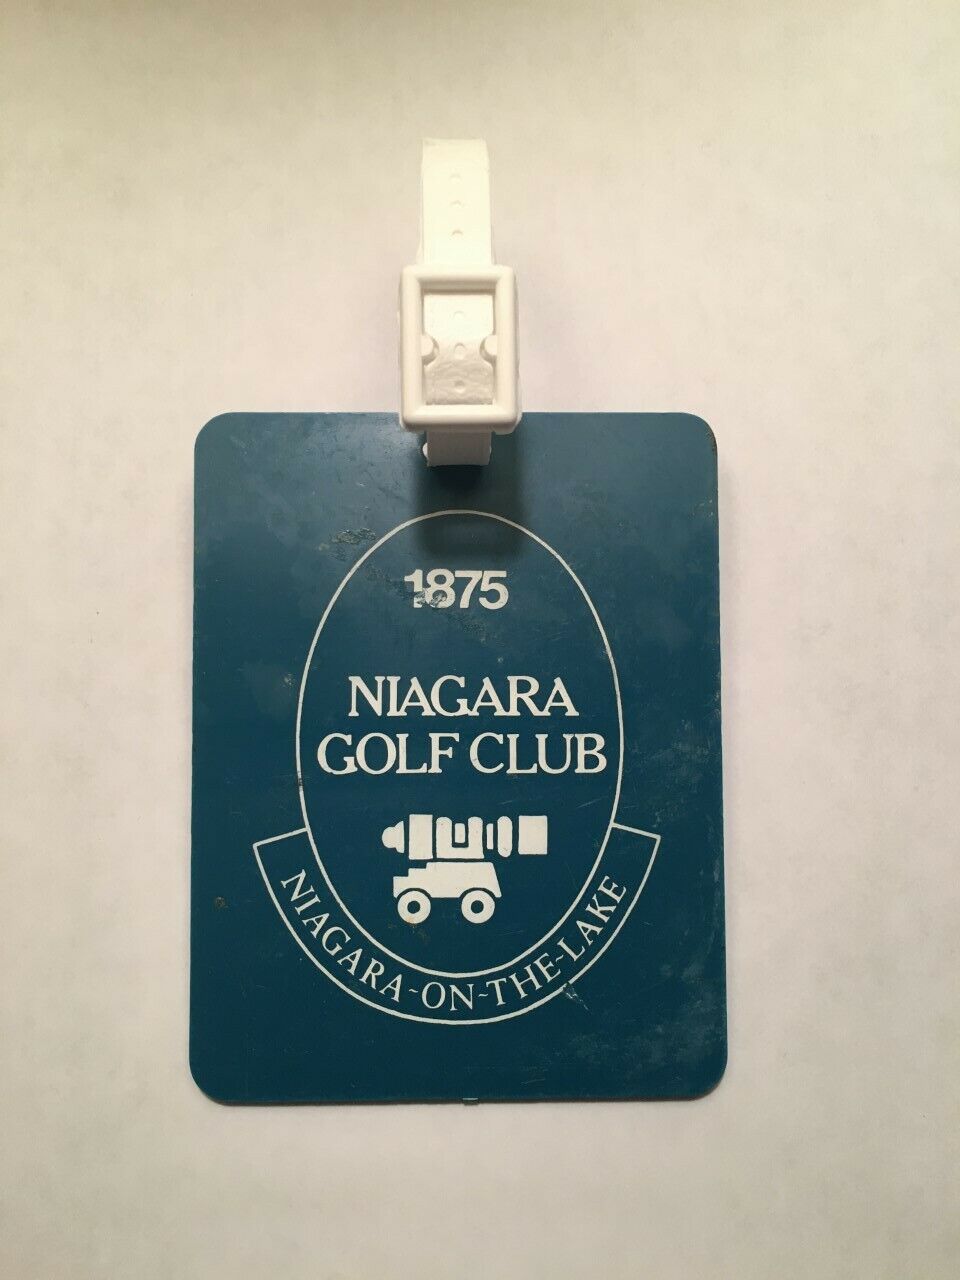 Hal Linden 'barney Miller' Golf Coll. - Niagara-on-the-lake G.c. Golf Bag Tag